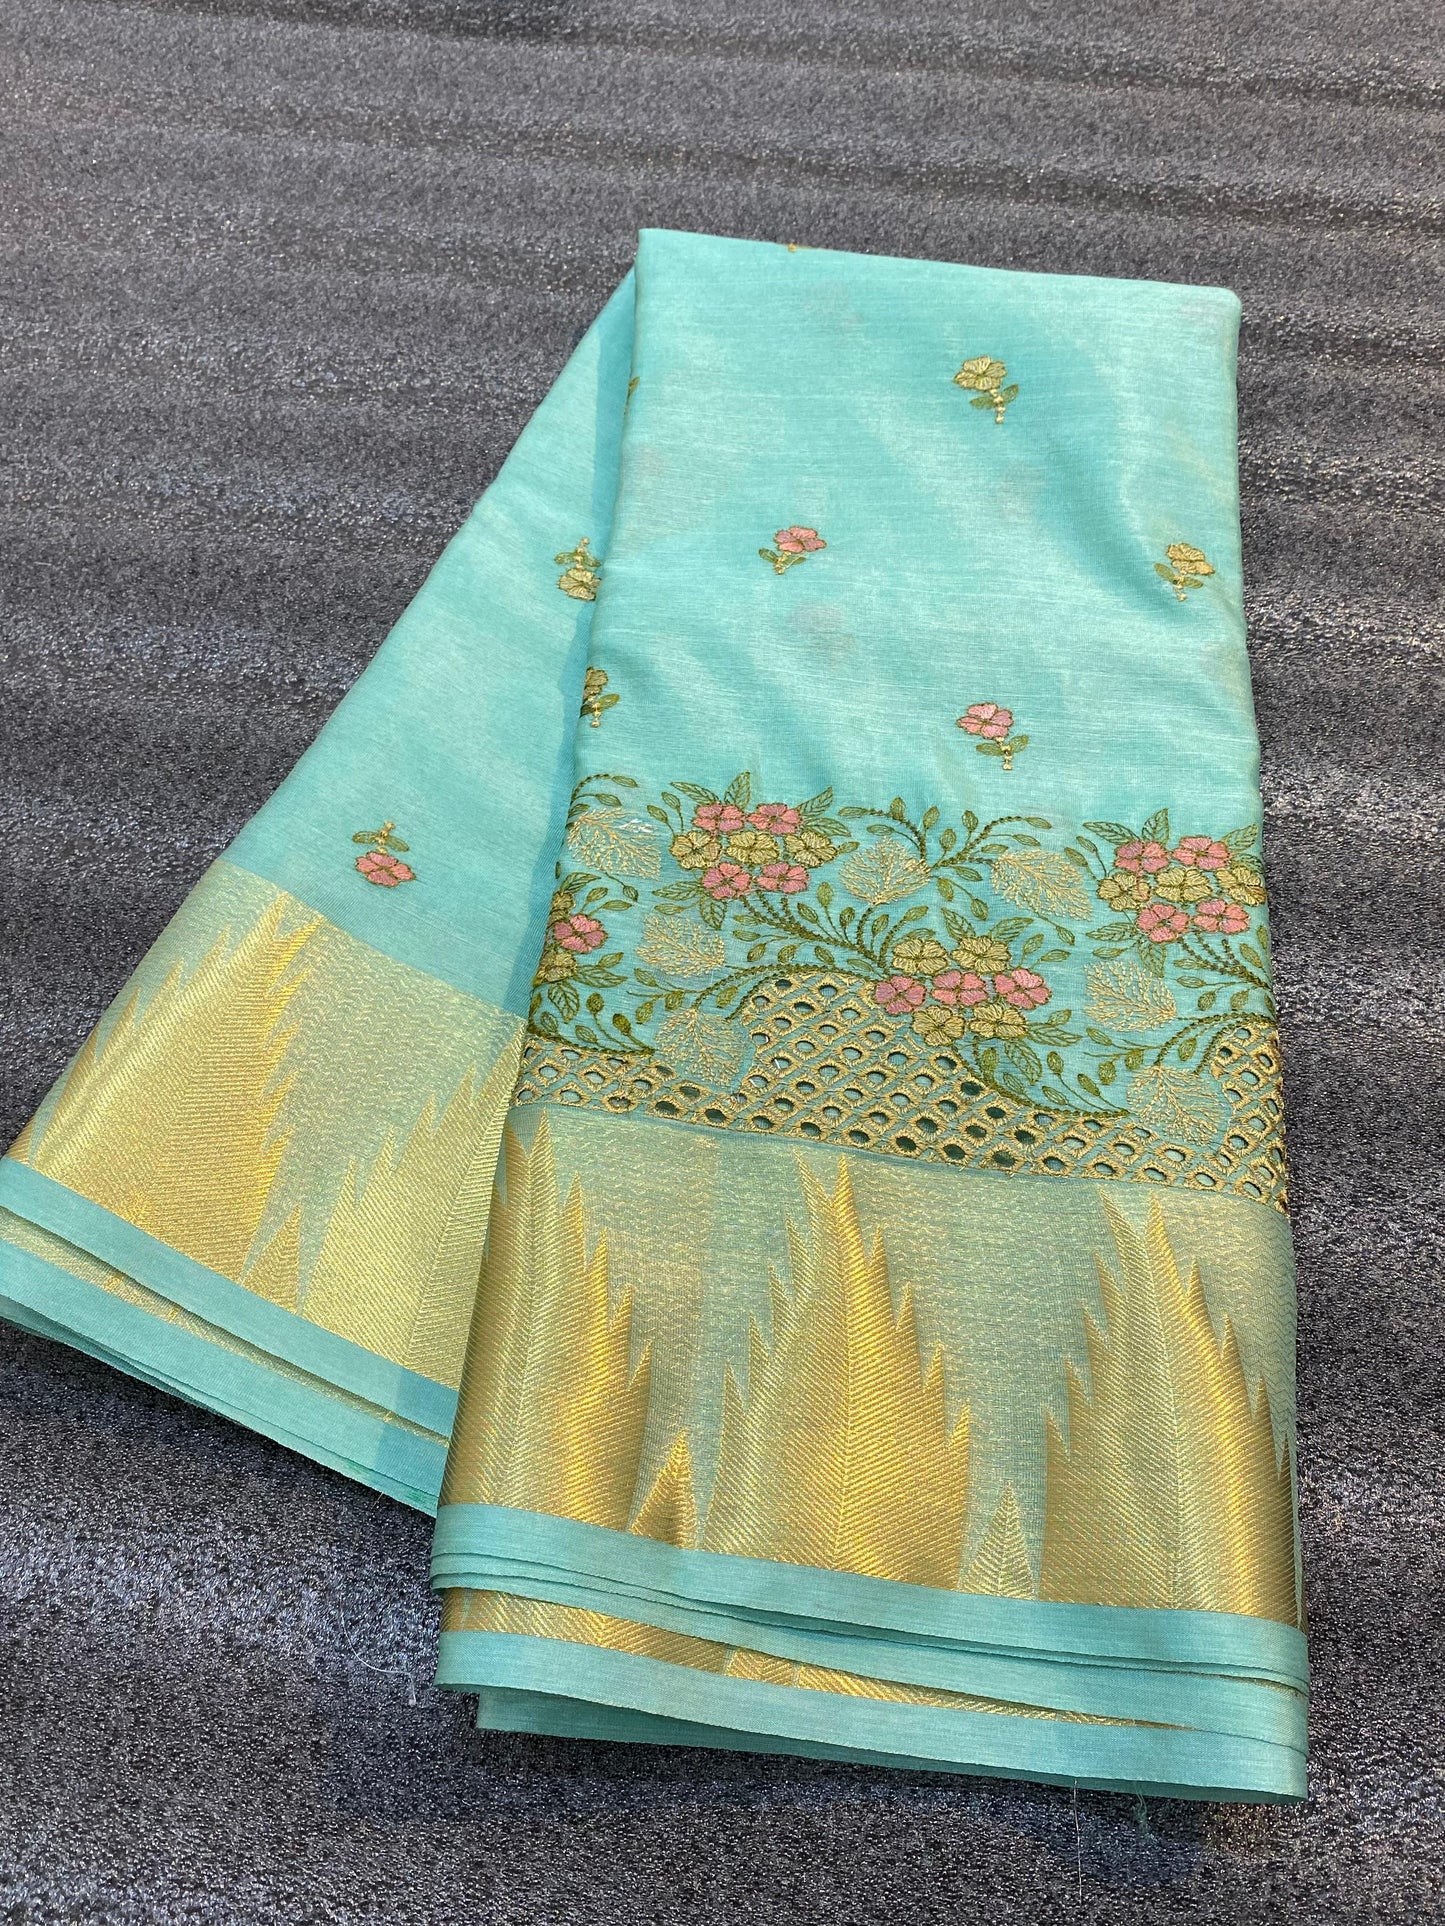 Trendy Banarasi warm semi dupion silk saree